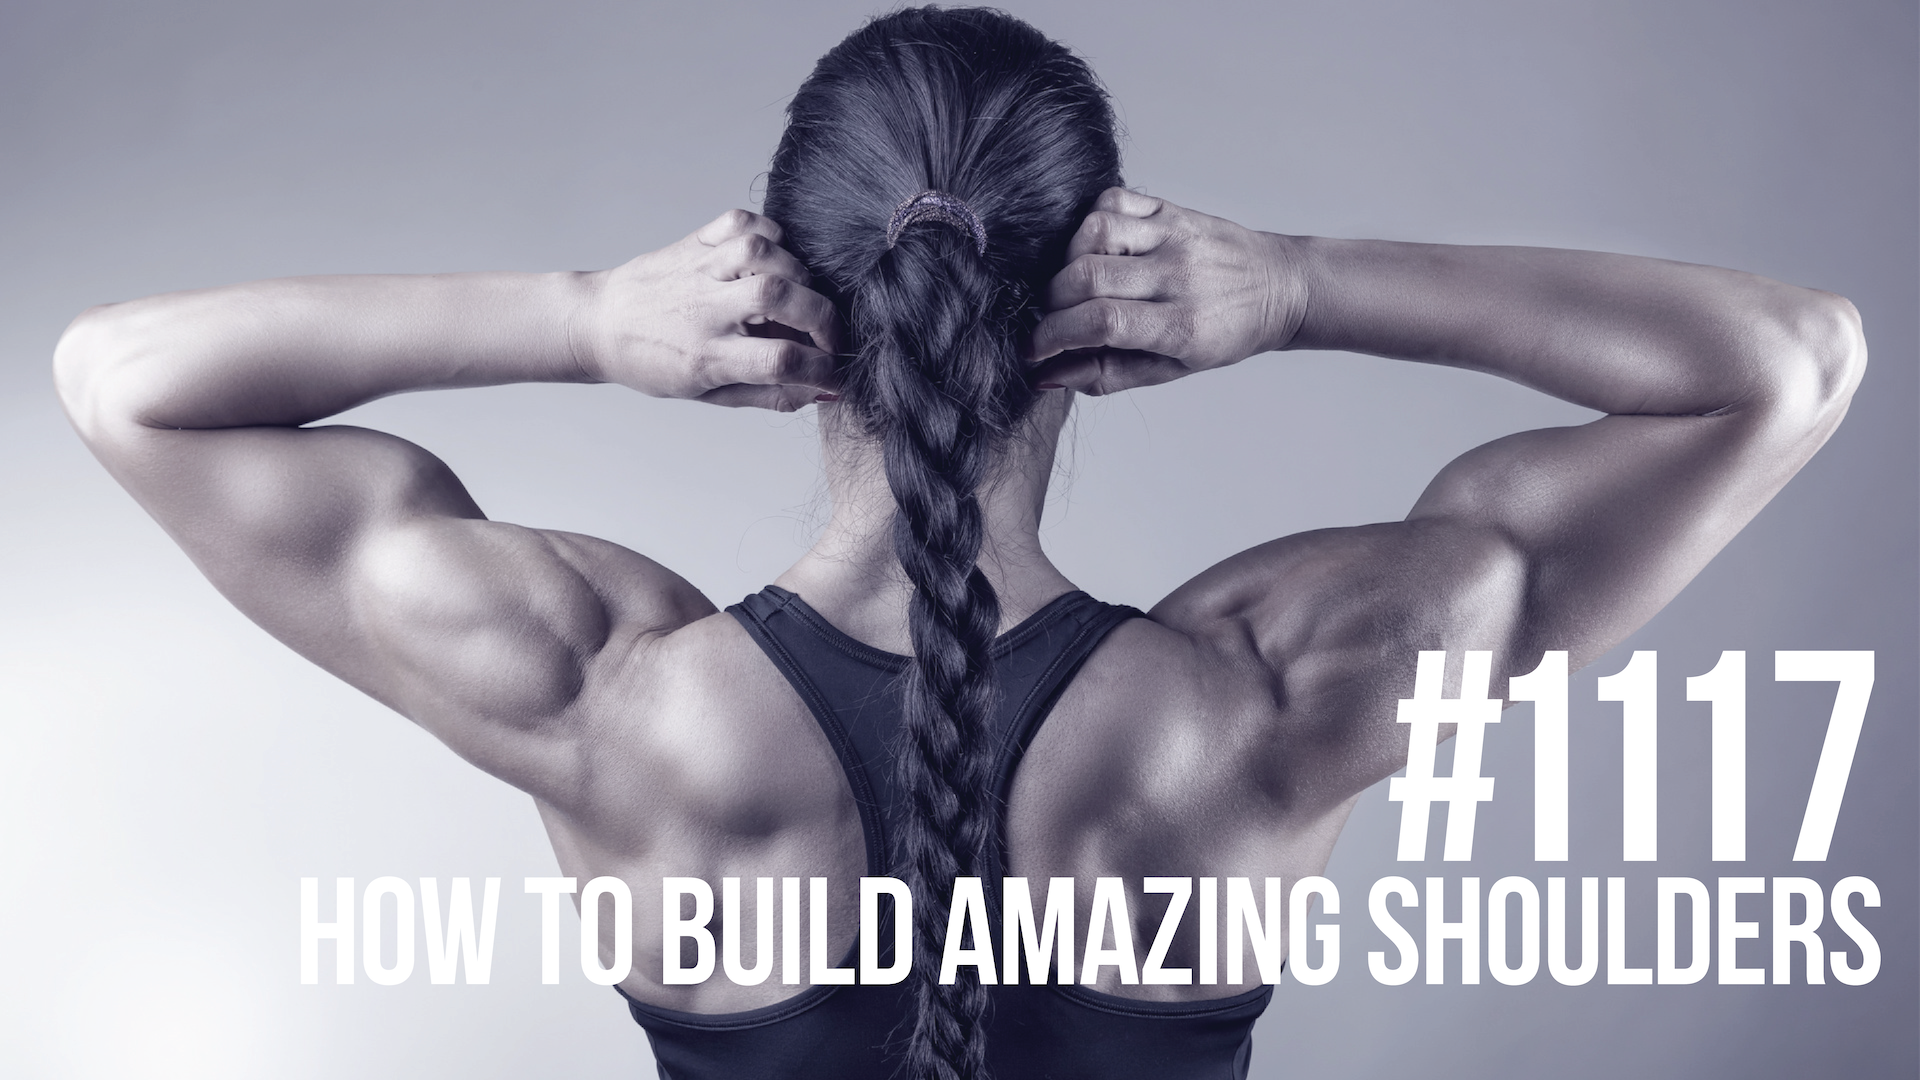 1117: How to Build Amazing Shoulders